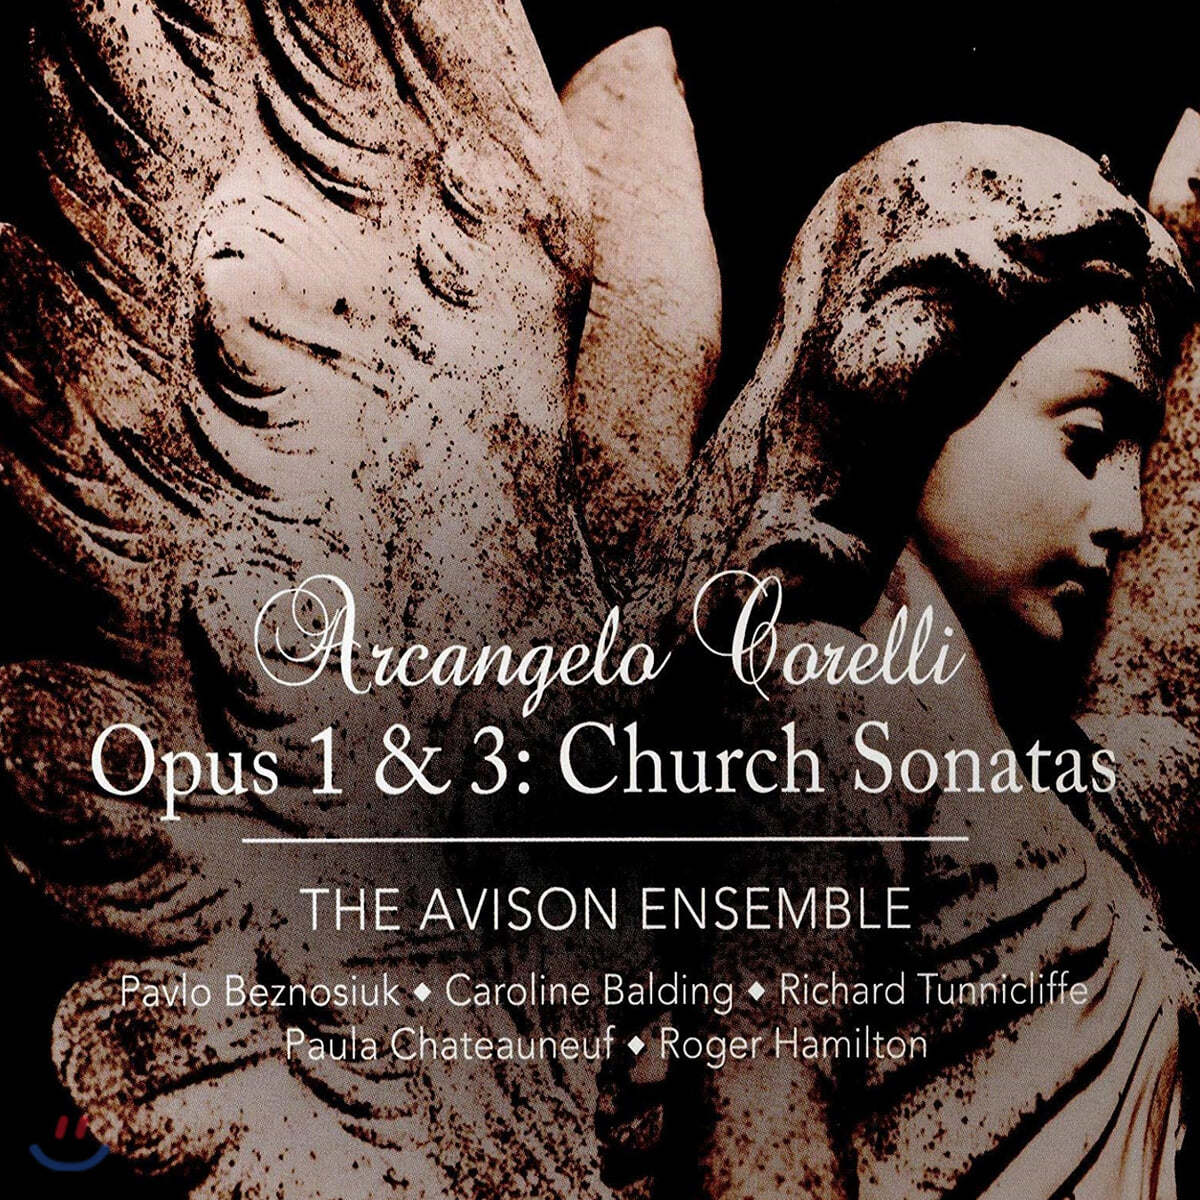 Avison Ensemble 코렐리: 교회 소나타 - 에이비슨 앙상블 (Corelli: Church Sonatas Op. 1, 3)